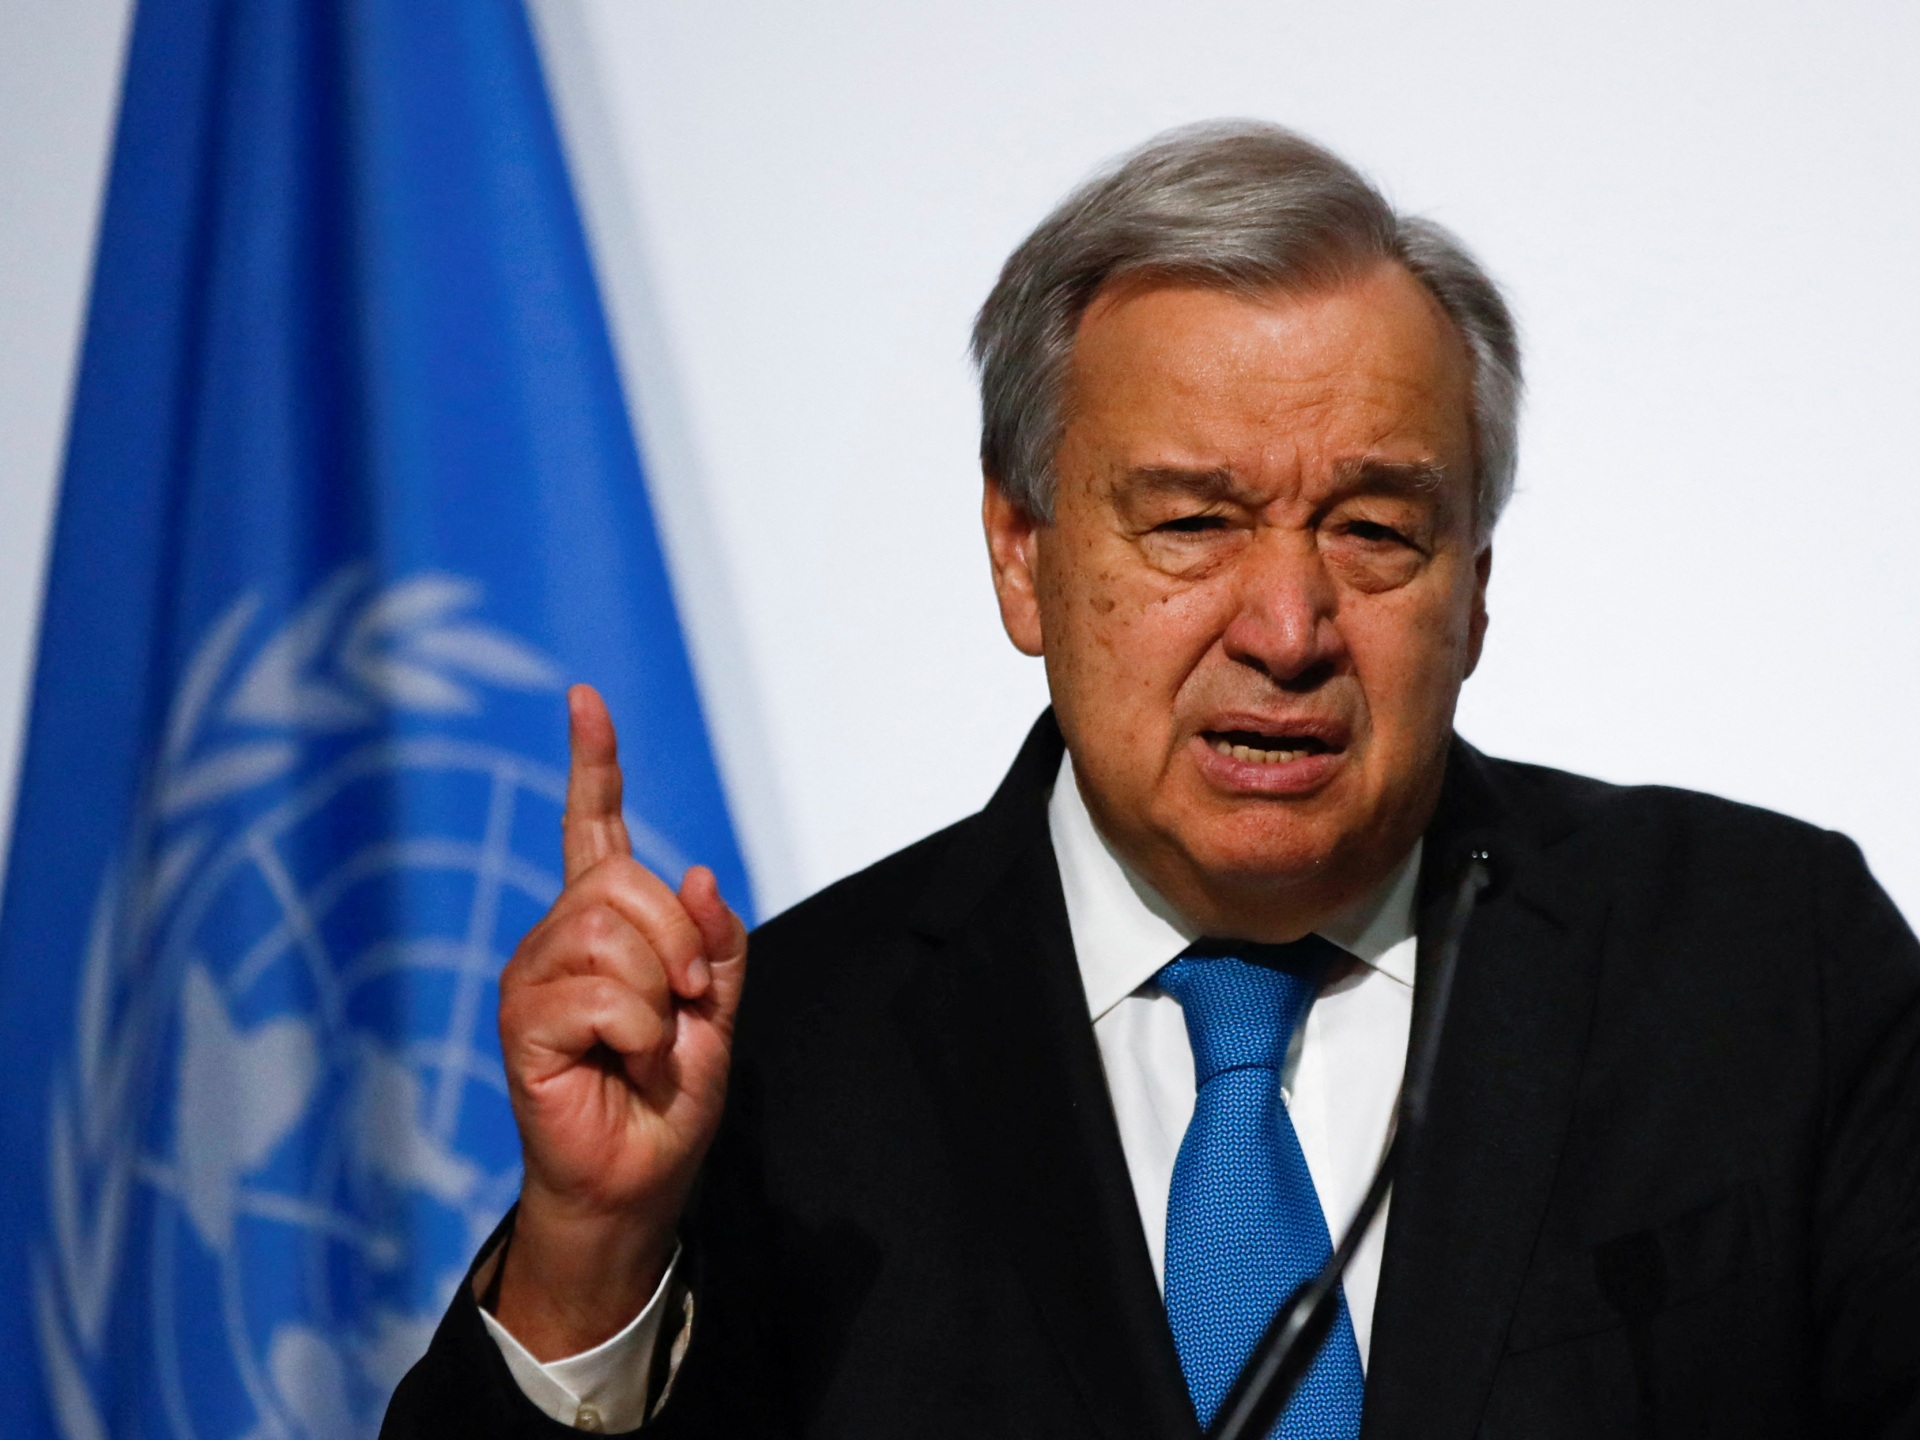 ‘No legal value’: UN chief condemns Russia’s planned annexation